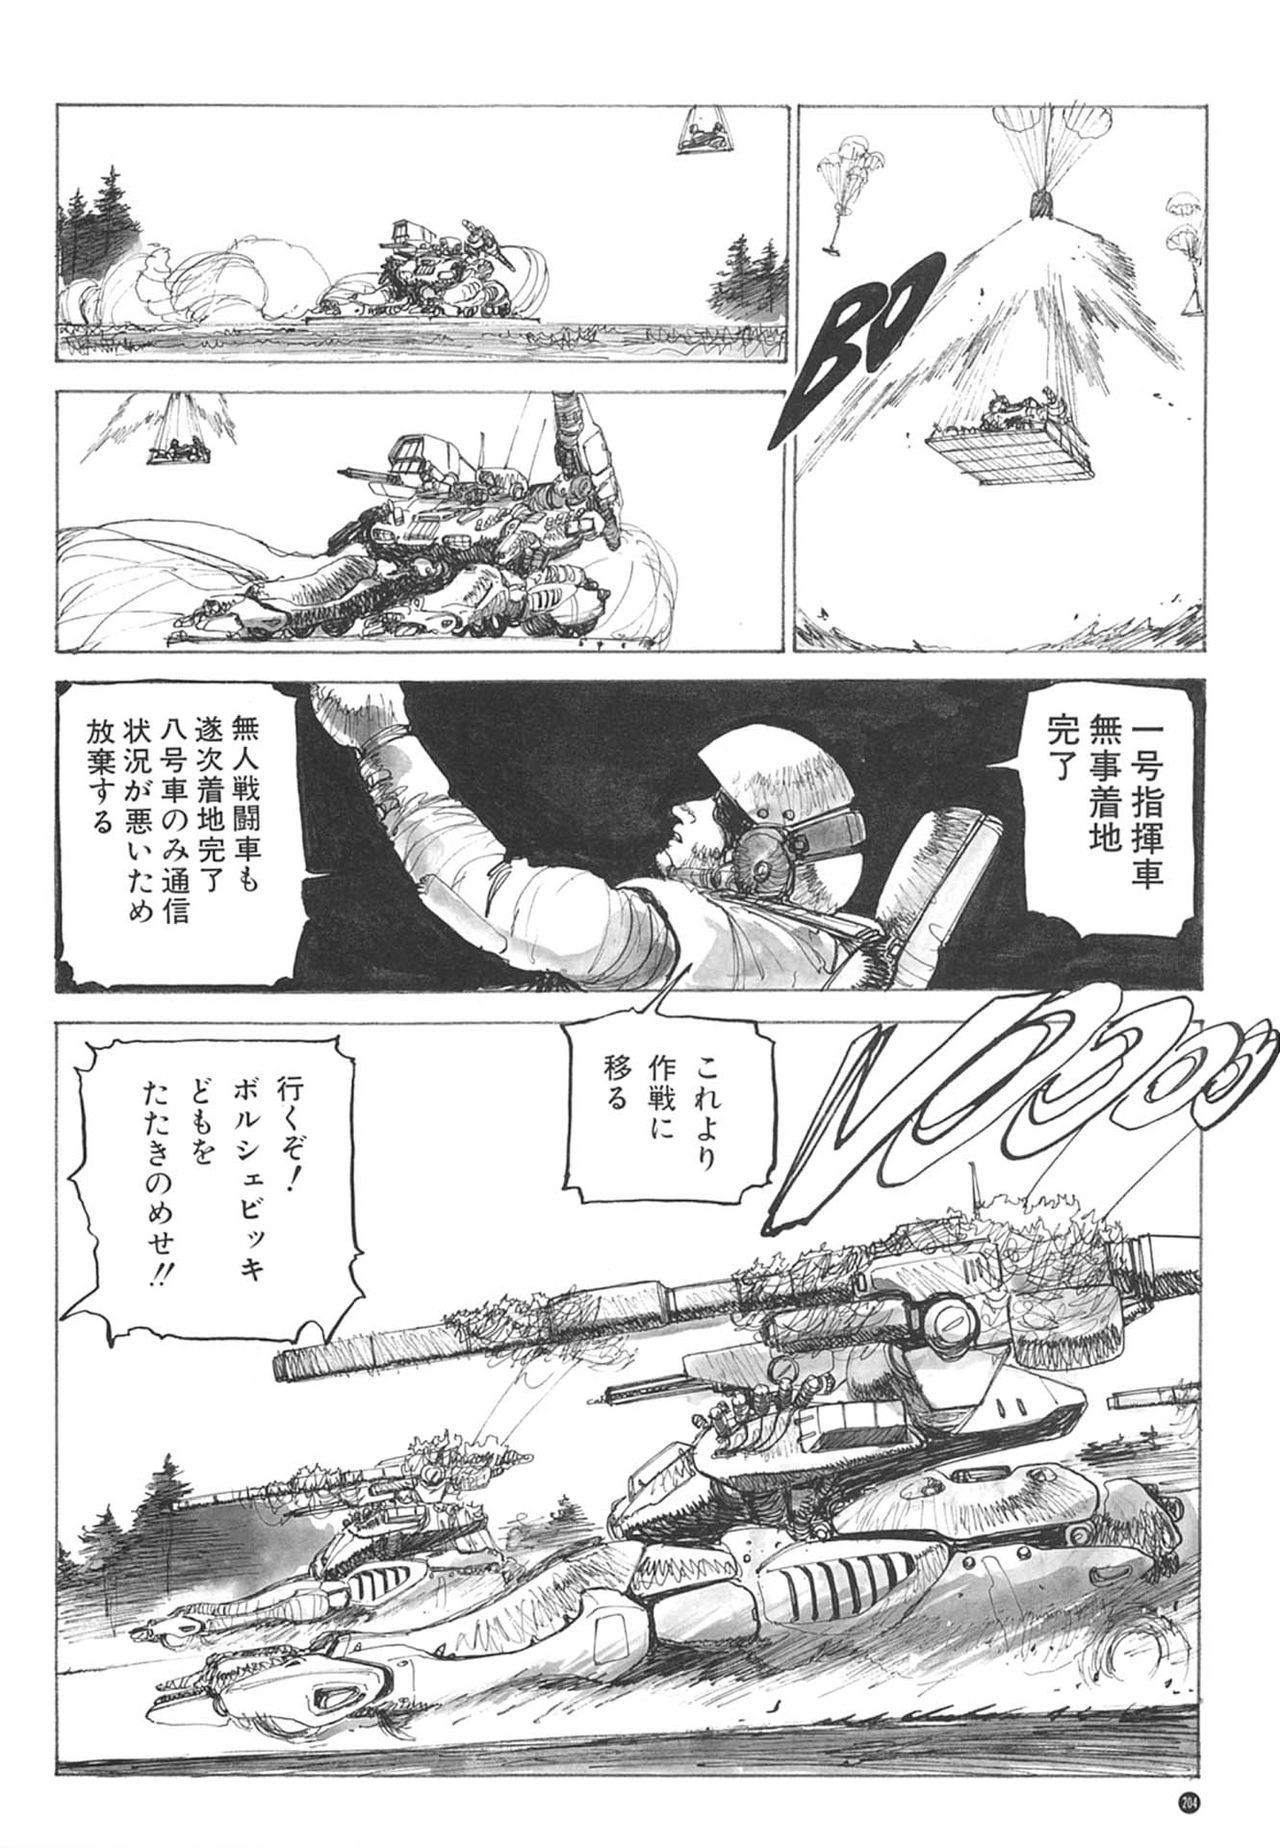 [Kazuhisa Kondo] Kazuhisa Kondo 2D & 3D Works - Go Ahead - From Mobile Suit Gundam to Original Mechanism 203